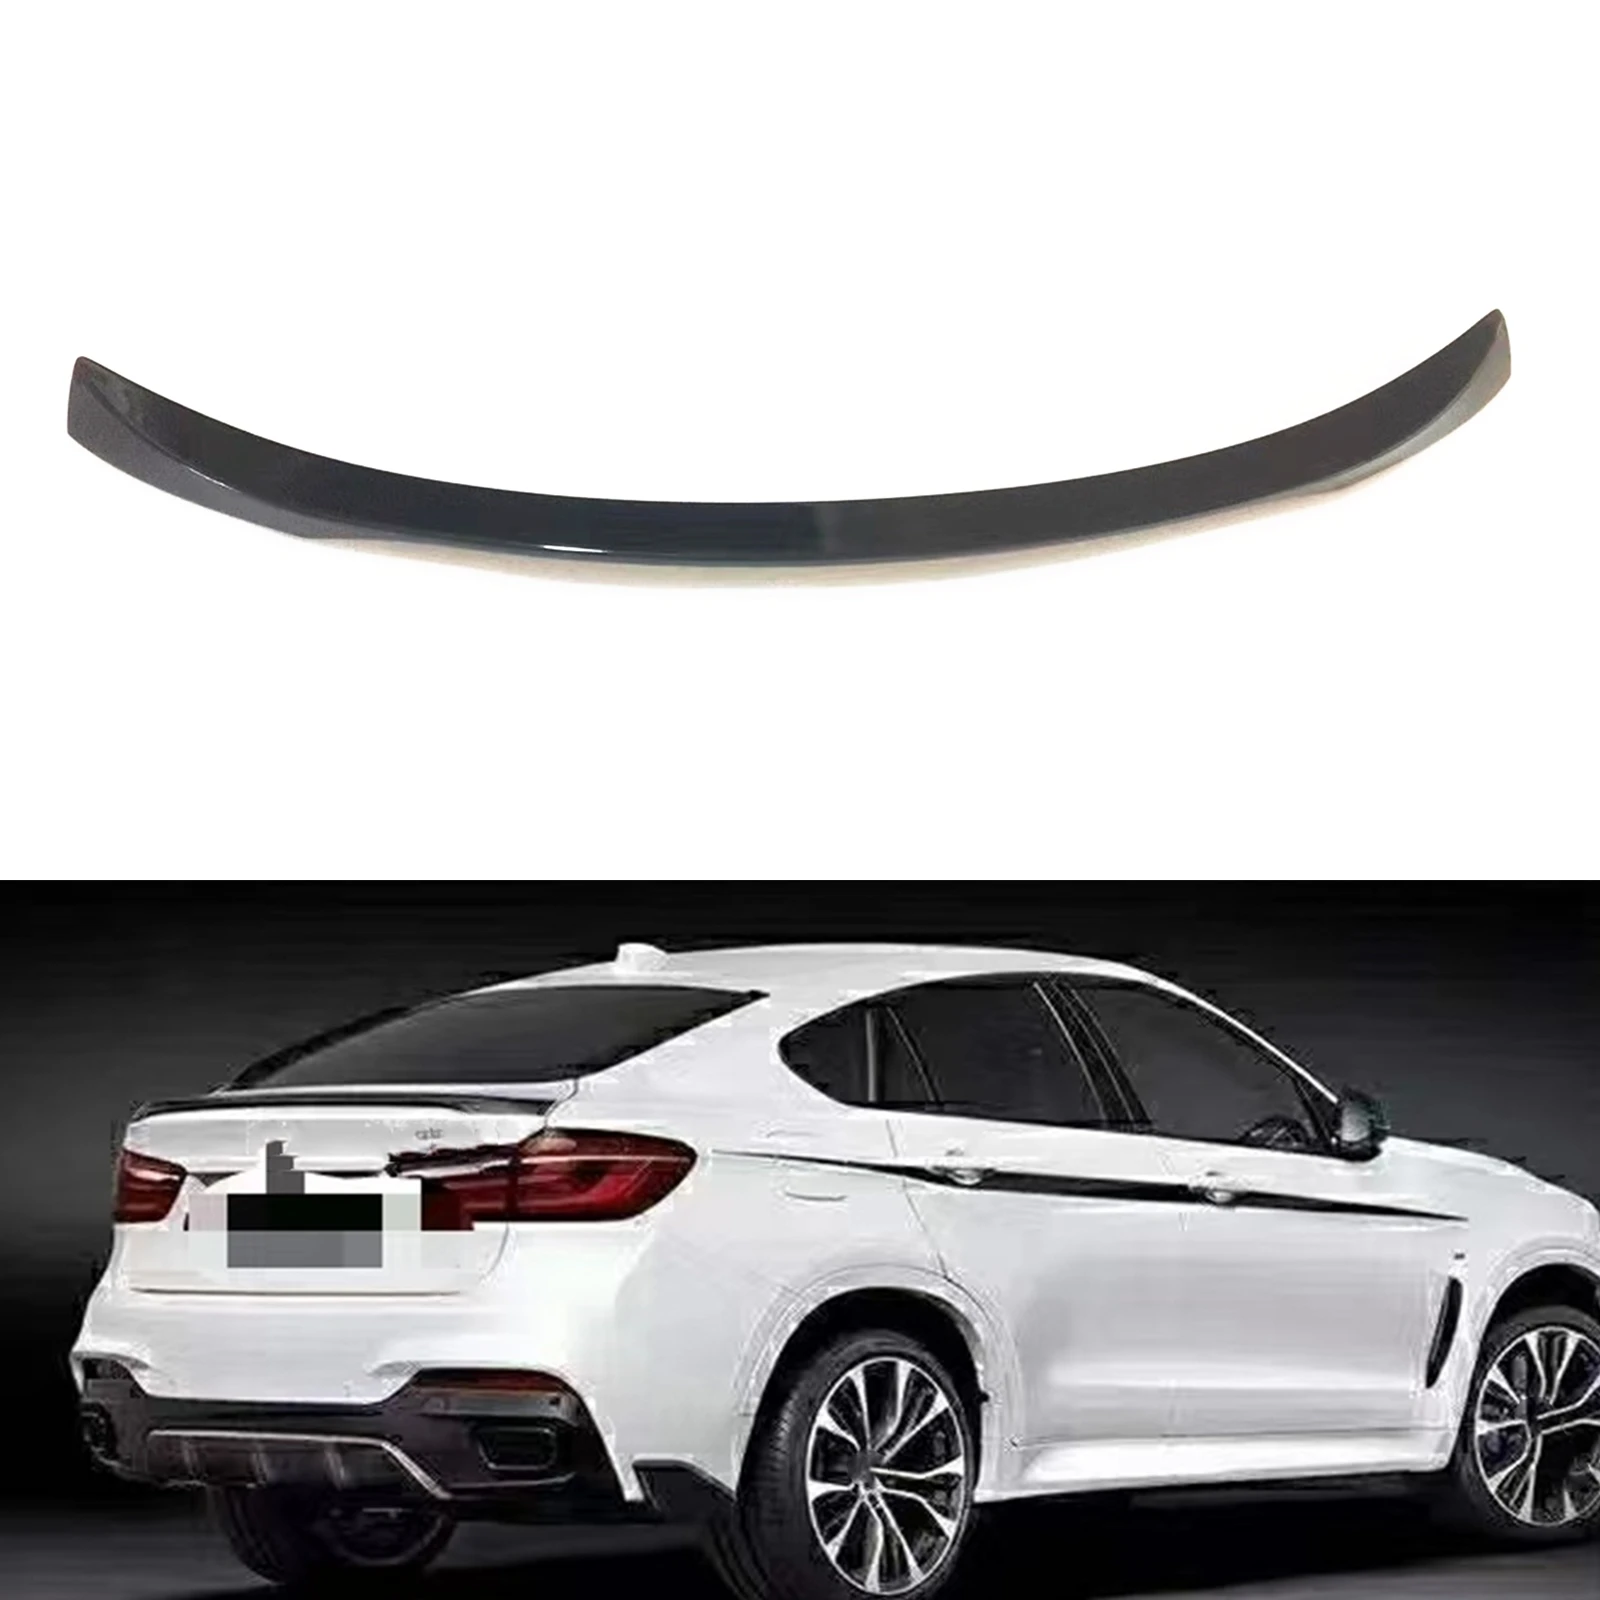 

Car Rear Trunk Spoiler Lip Wing For BMW F16 X6 2015.7-2019 Glossy Black Tailgate Lid Flap Decklid Splitter Trim Upper Body Kit